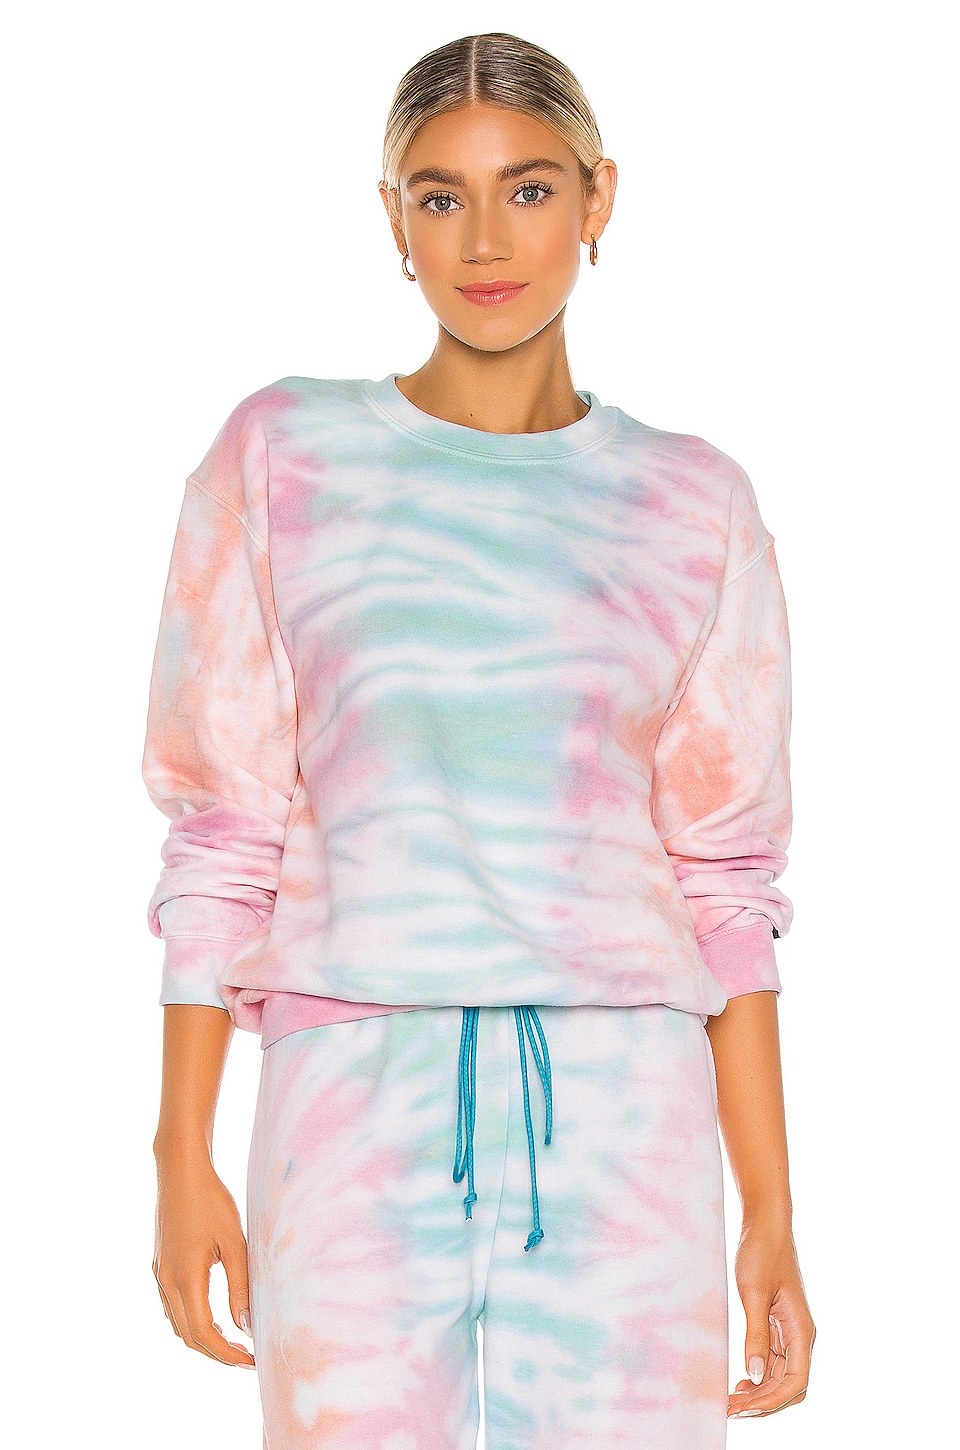 DANZY Tie Dye Collection Sweatshirt in Sherbet | REVOLVE